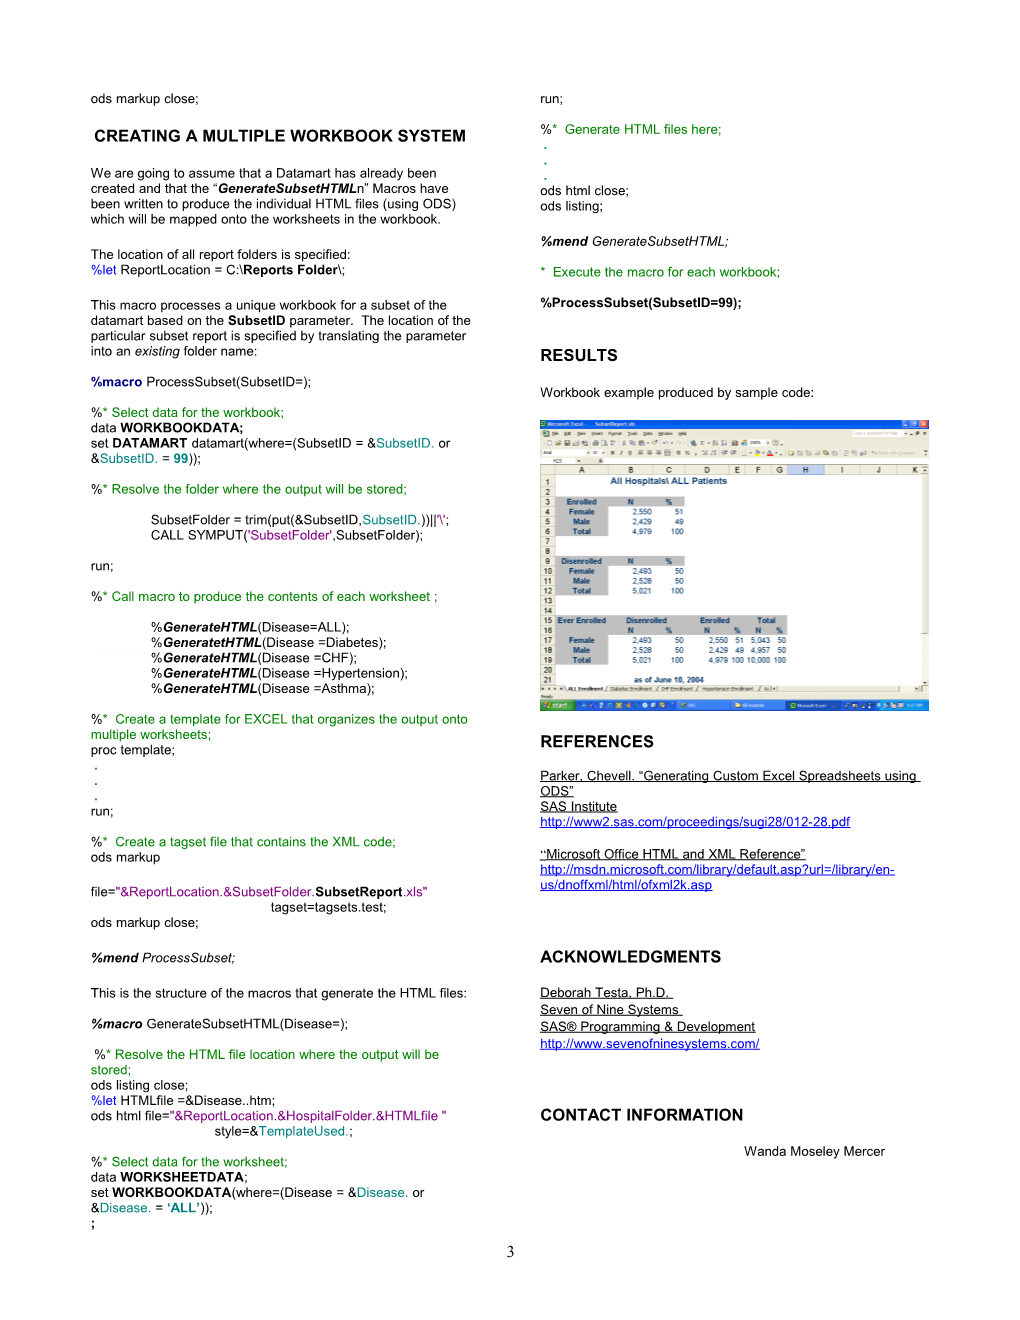 Multiple Multi-Sheet EXCEL Workbooks Using ODS